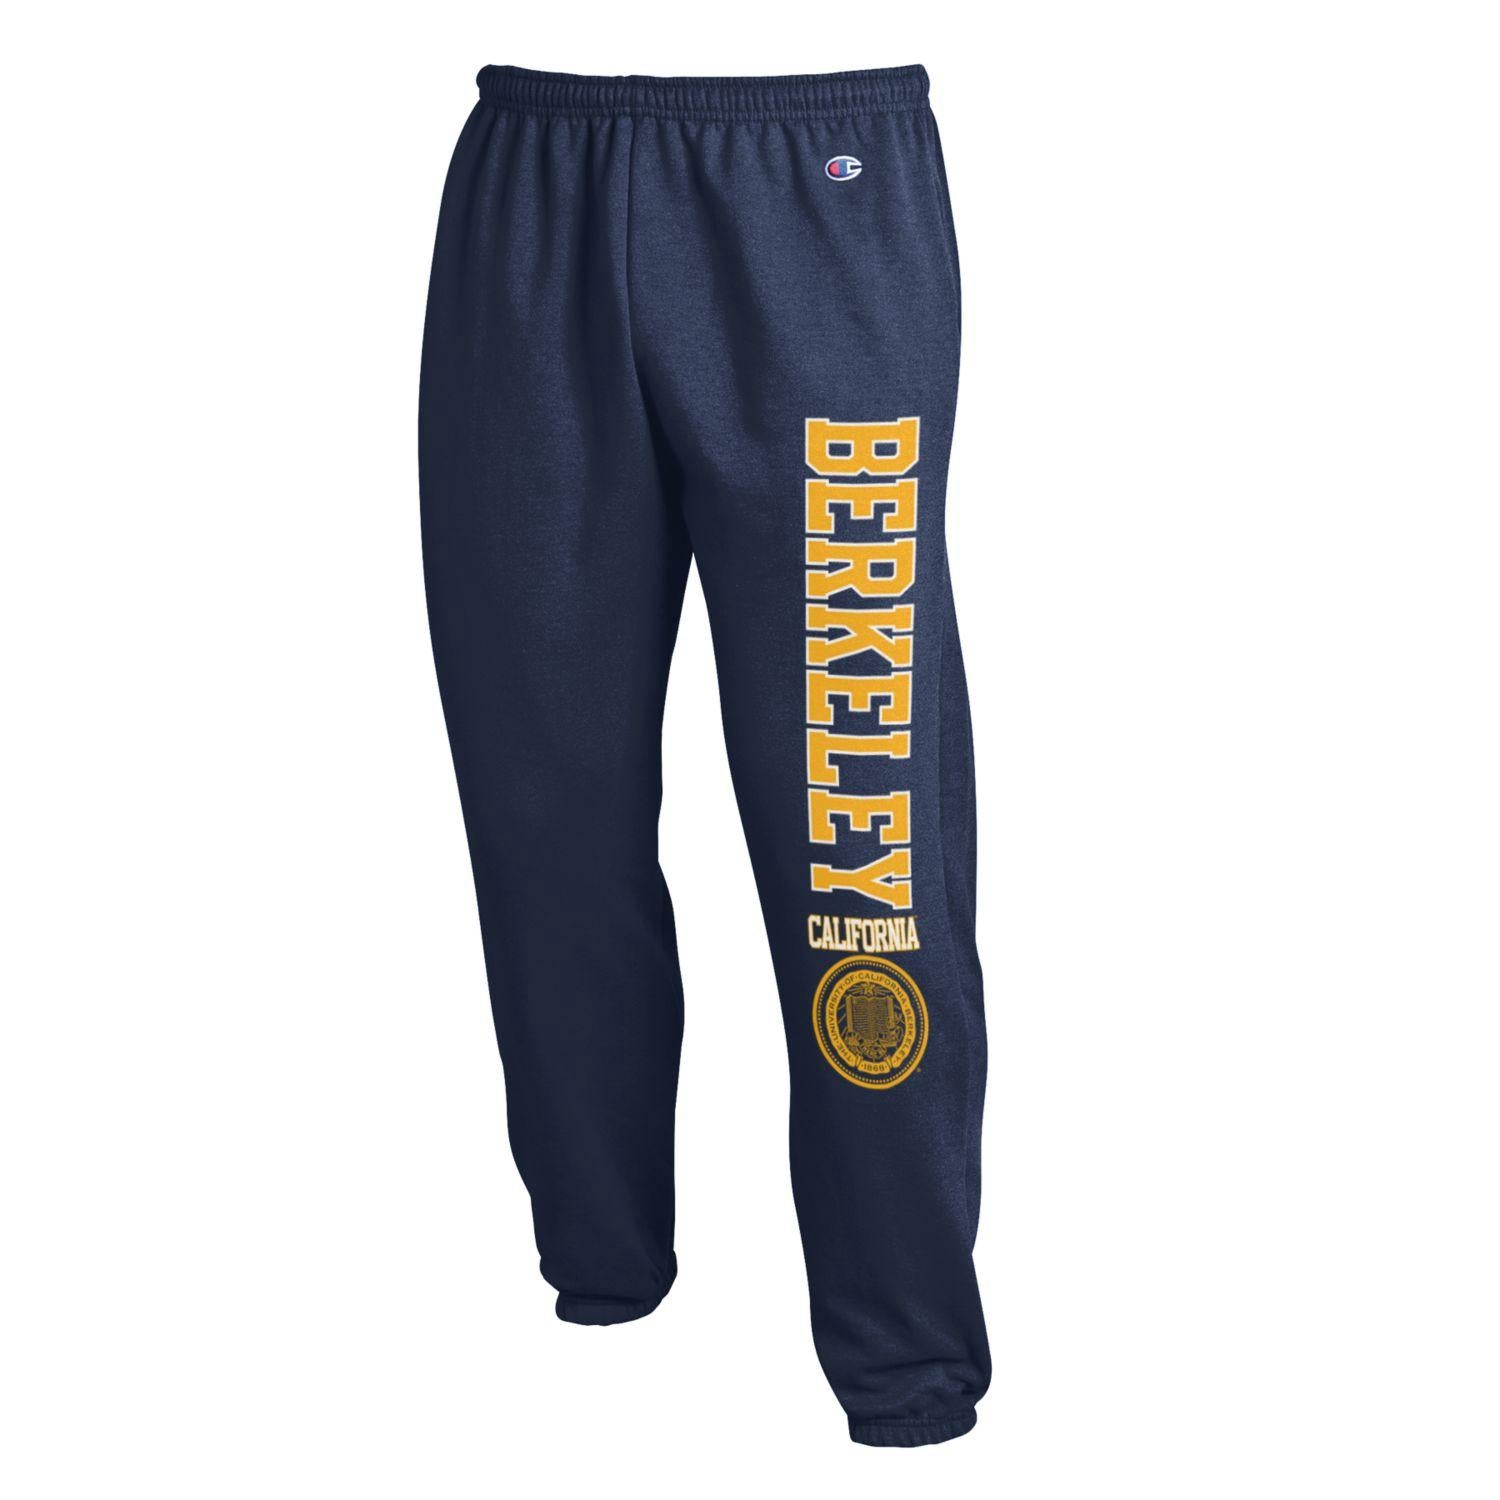 UC Berkeley Cal Champion Men's Banded Pants-Navy – Shop College Wear